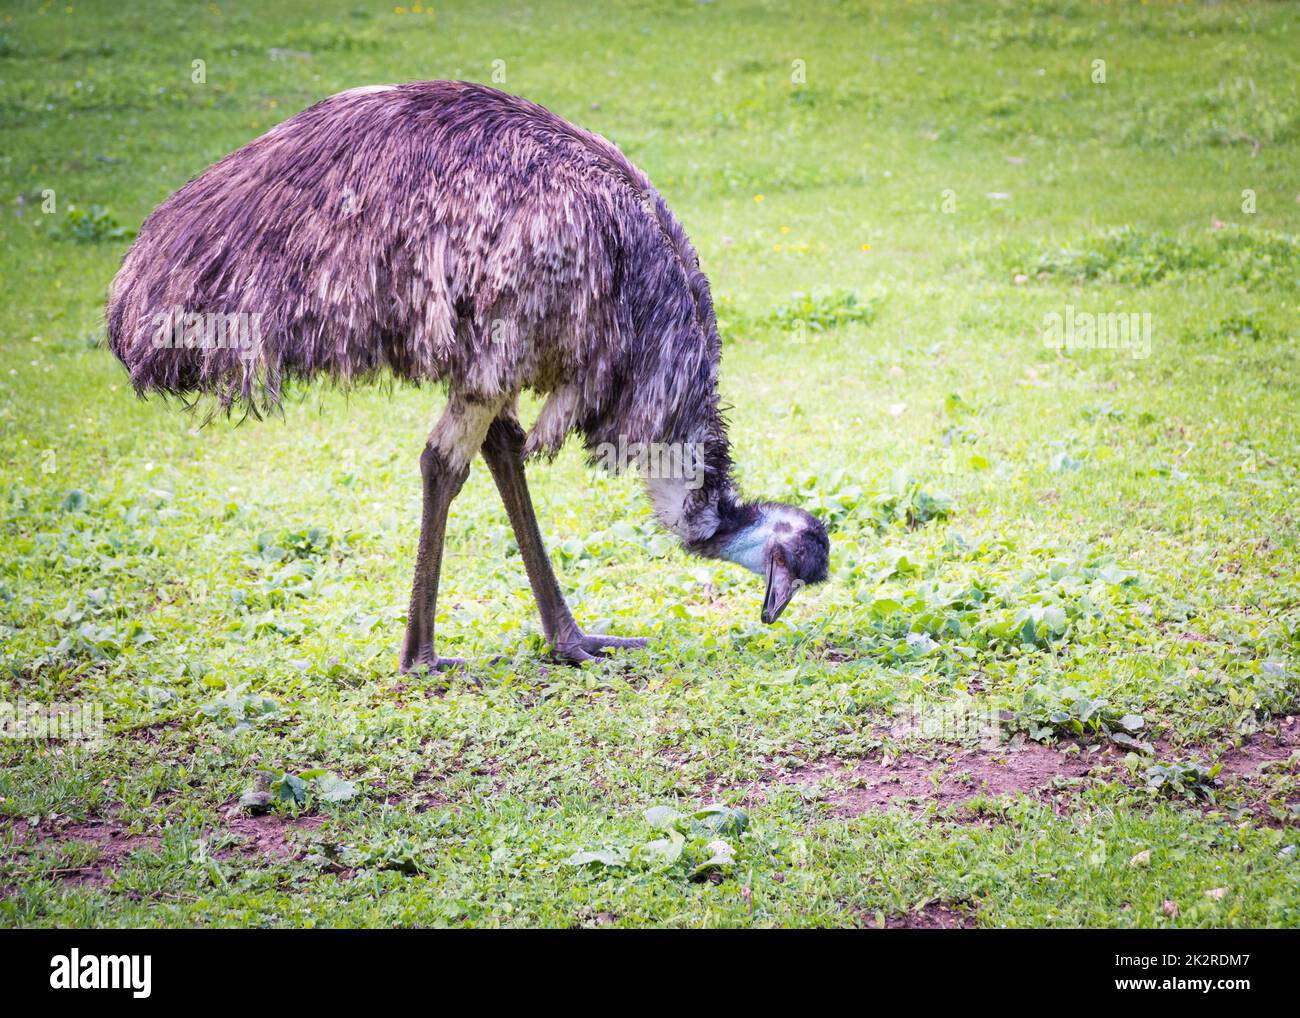 Emu eating grass Stock Photo